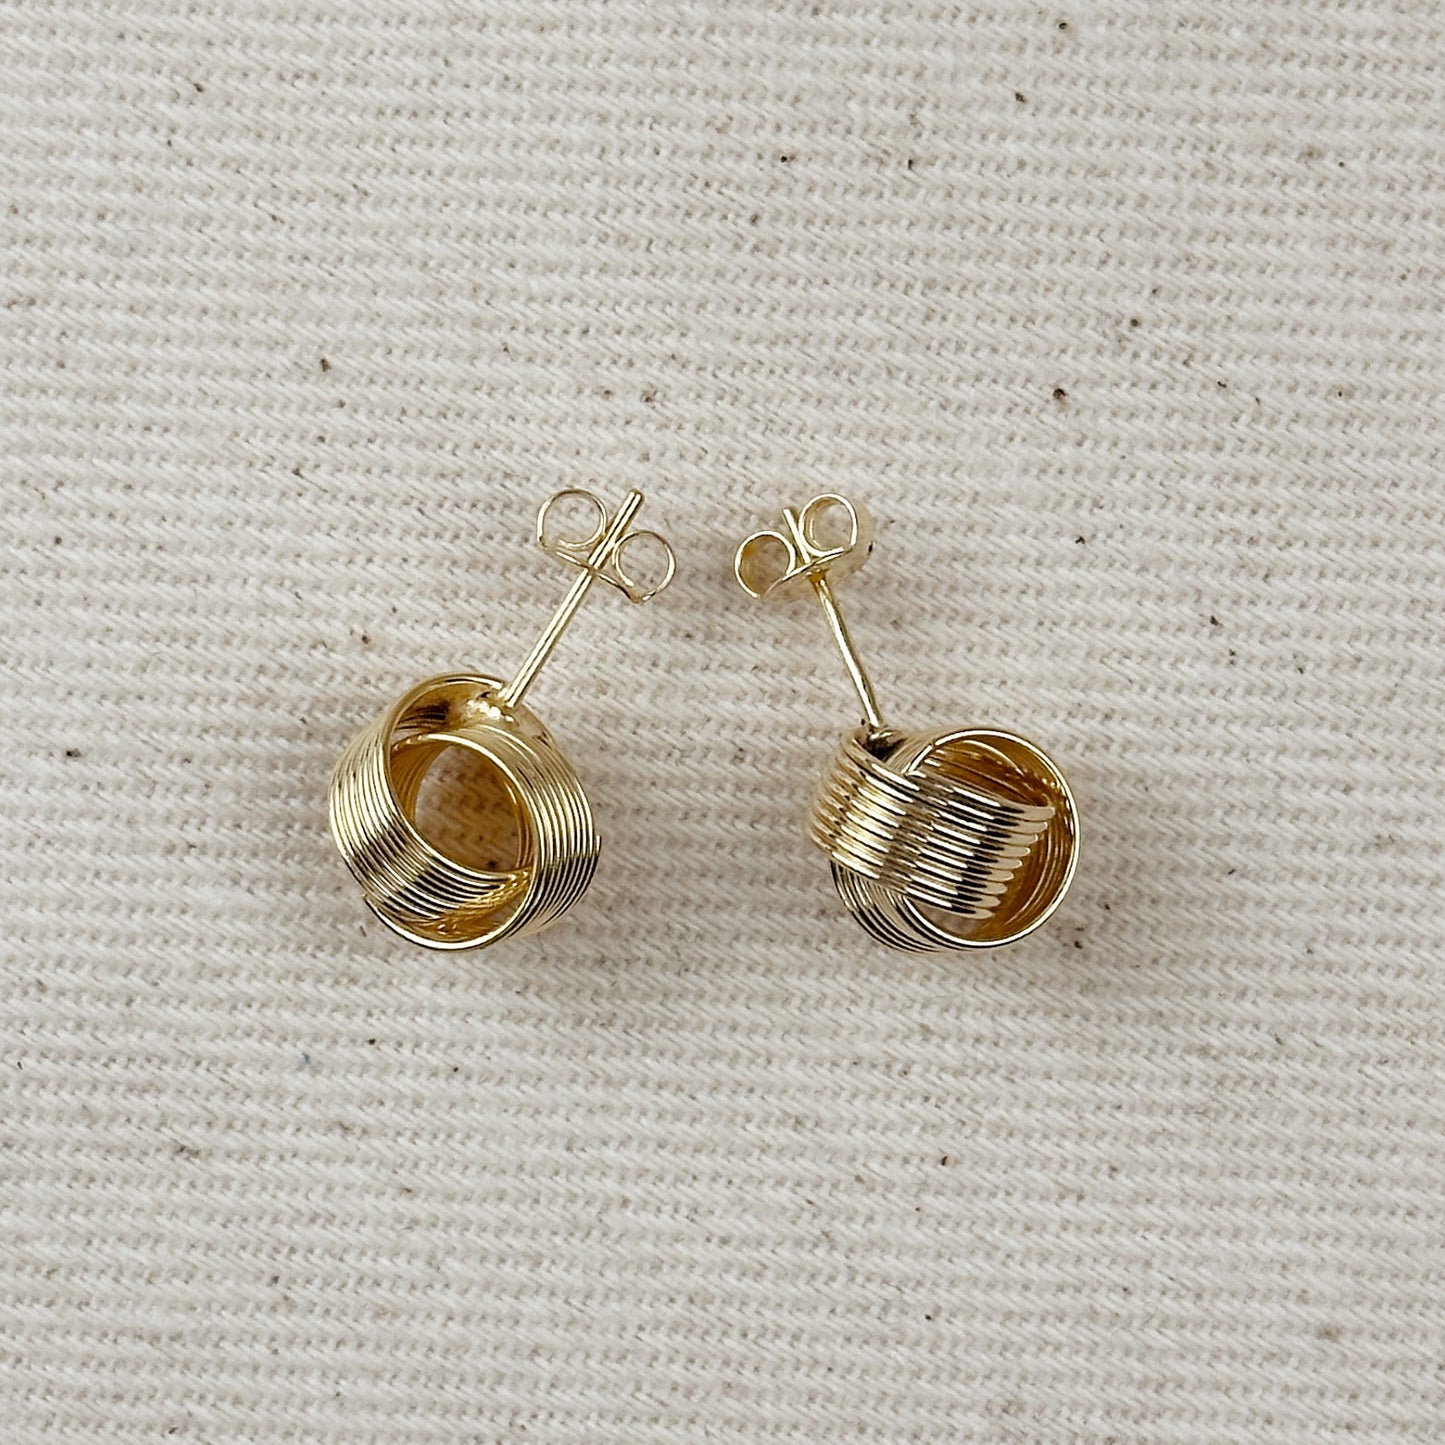 18k Gold Filled Wire Knot Stud Earrings